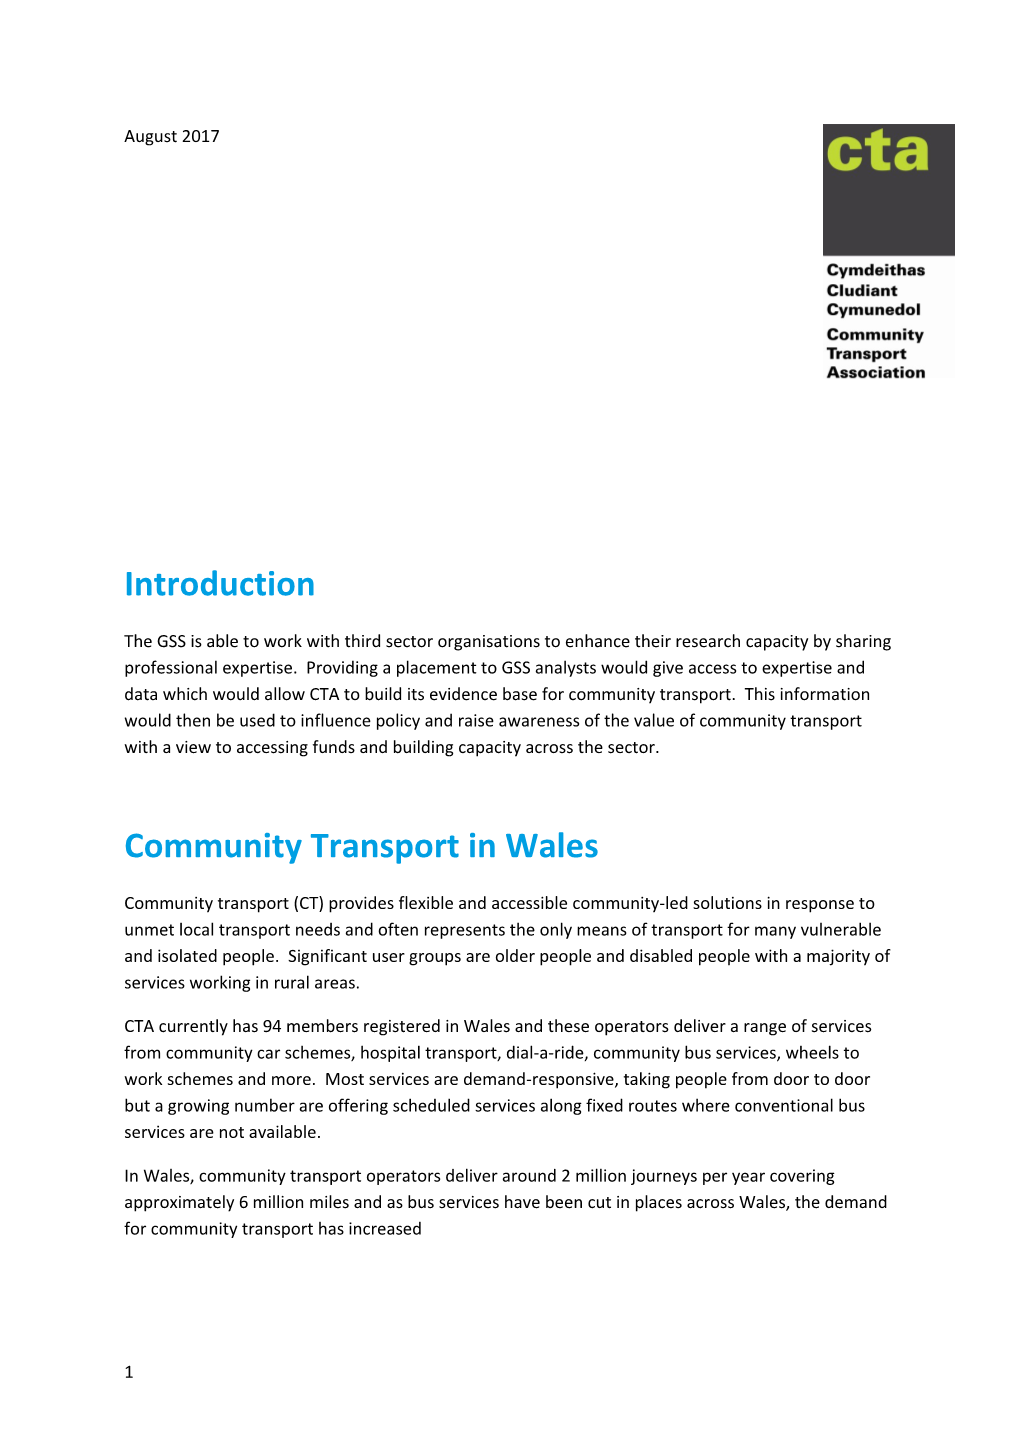 Community Transport in Wales